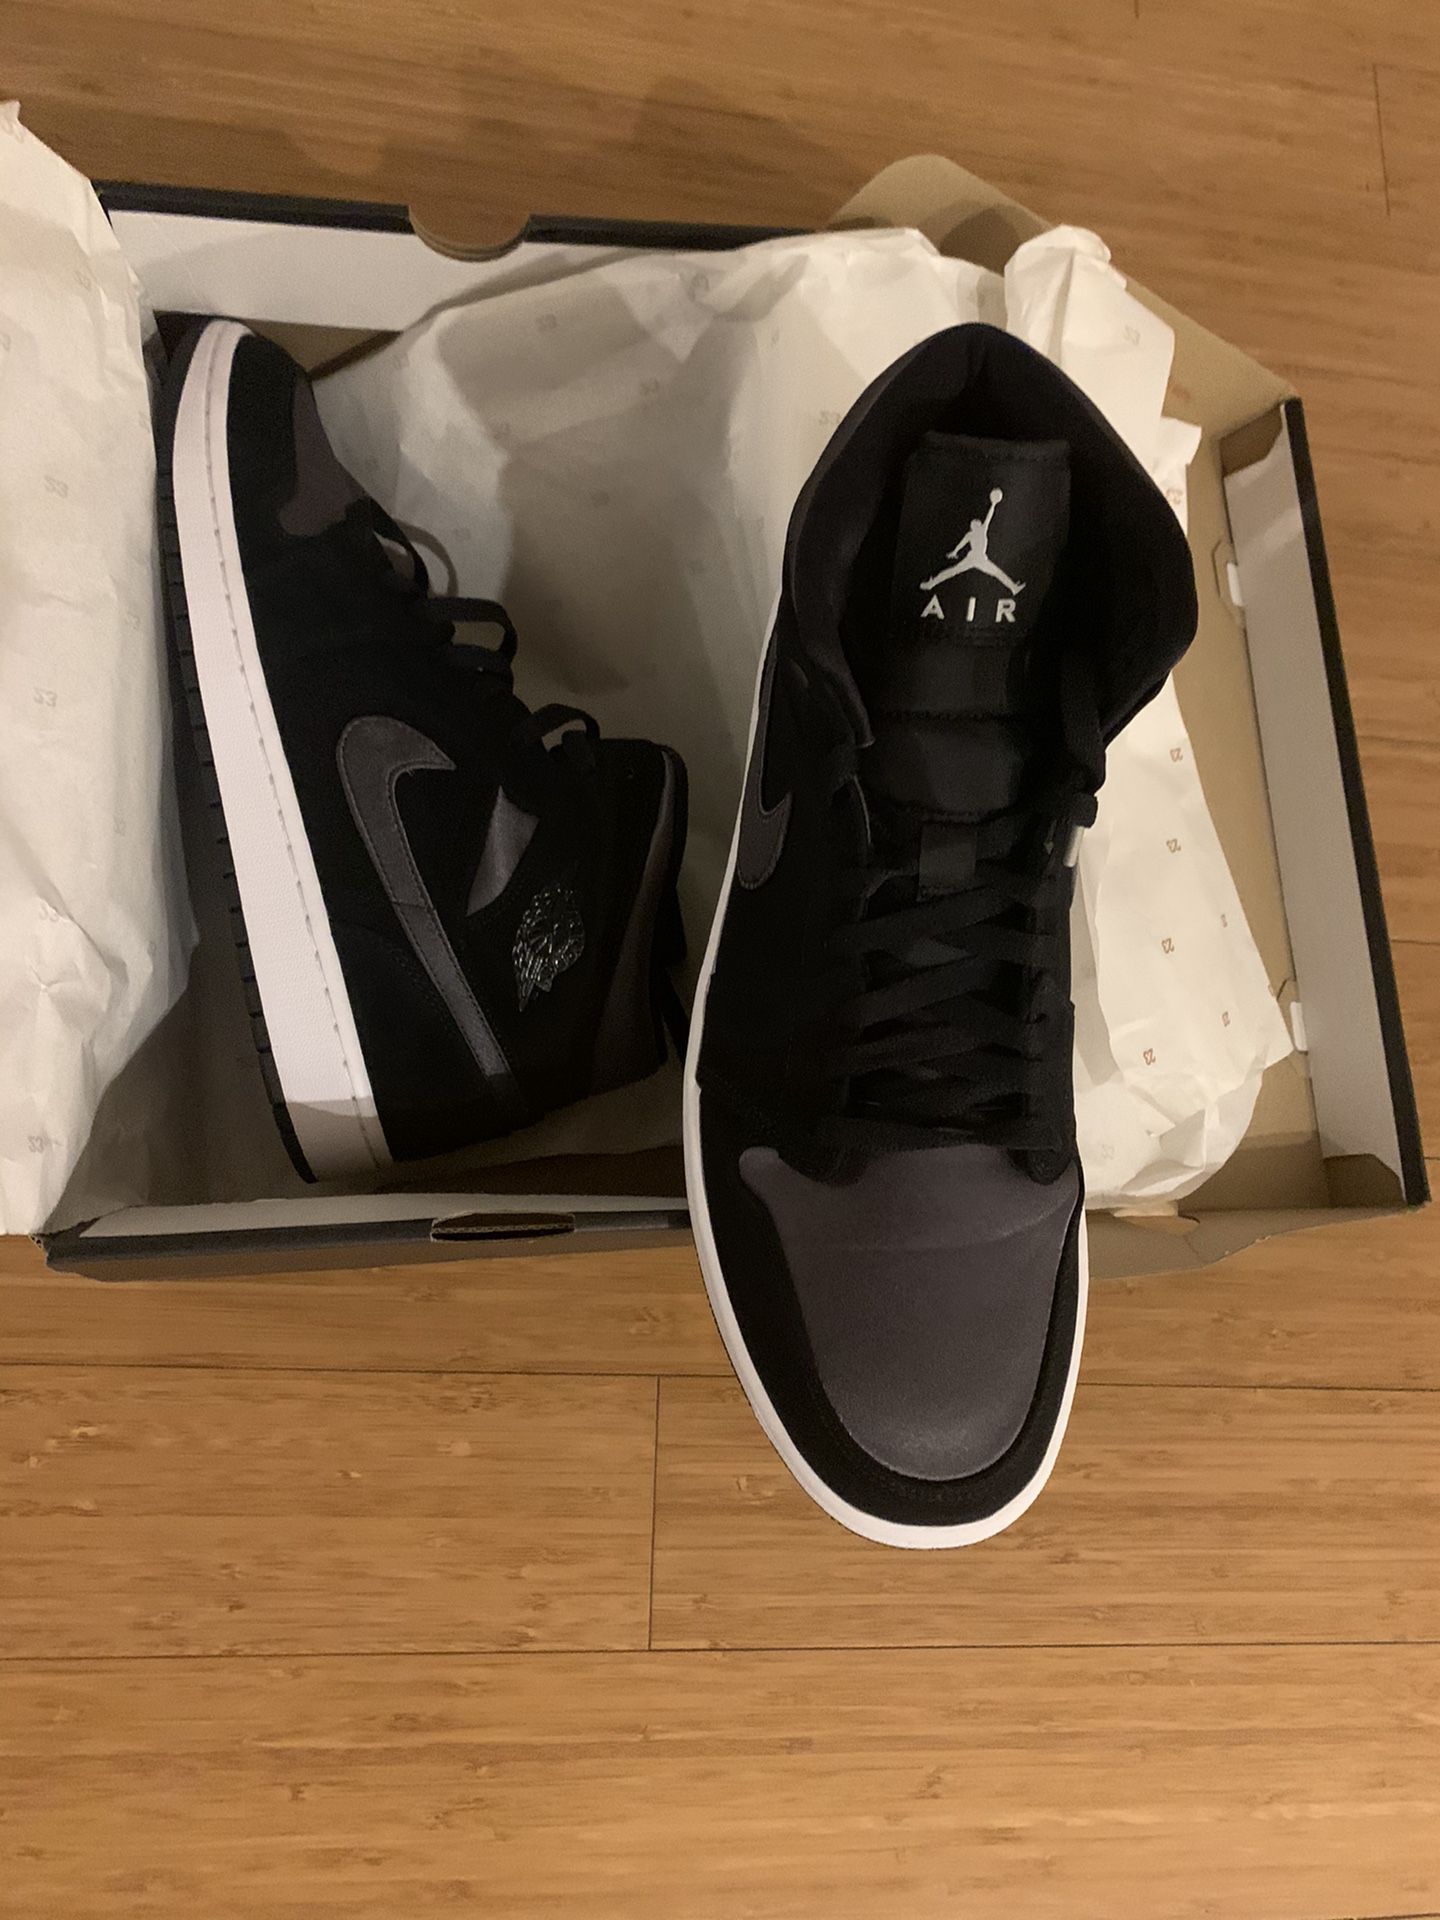 Nike Air Jordan 1 brand new in box (size 13)